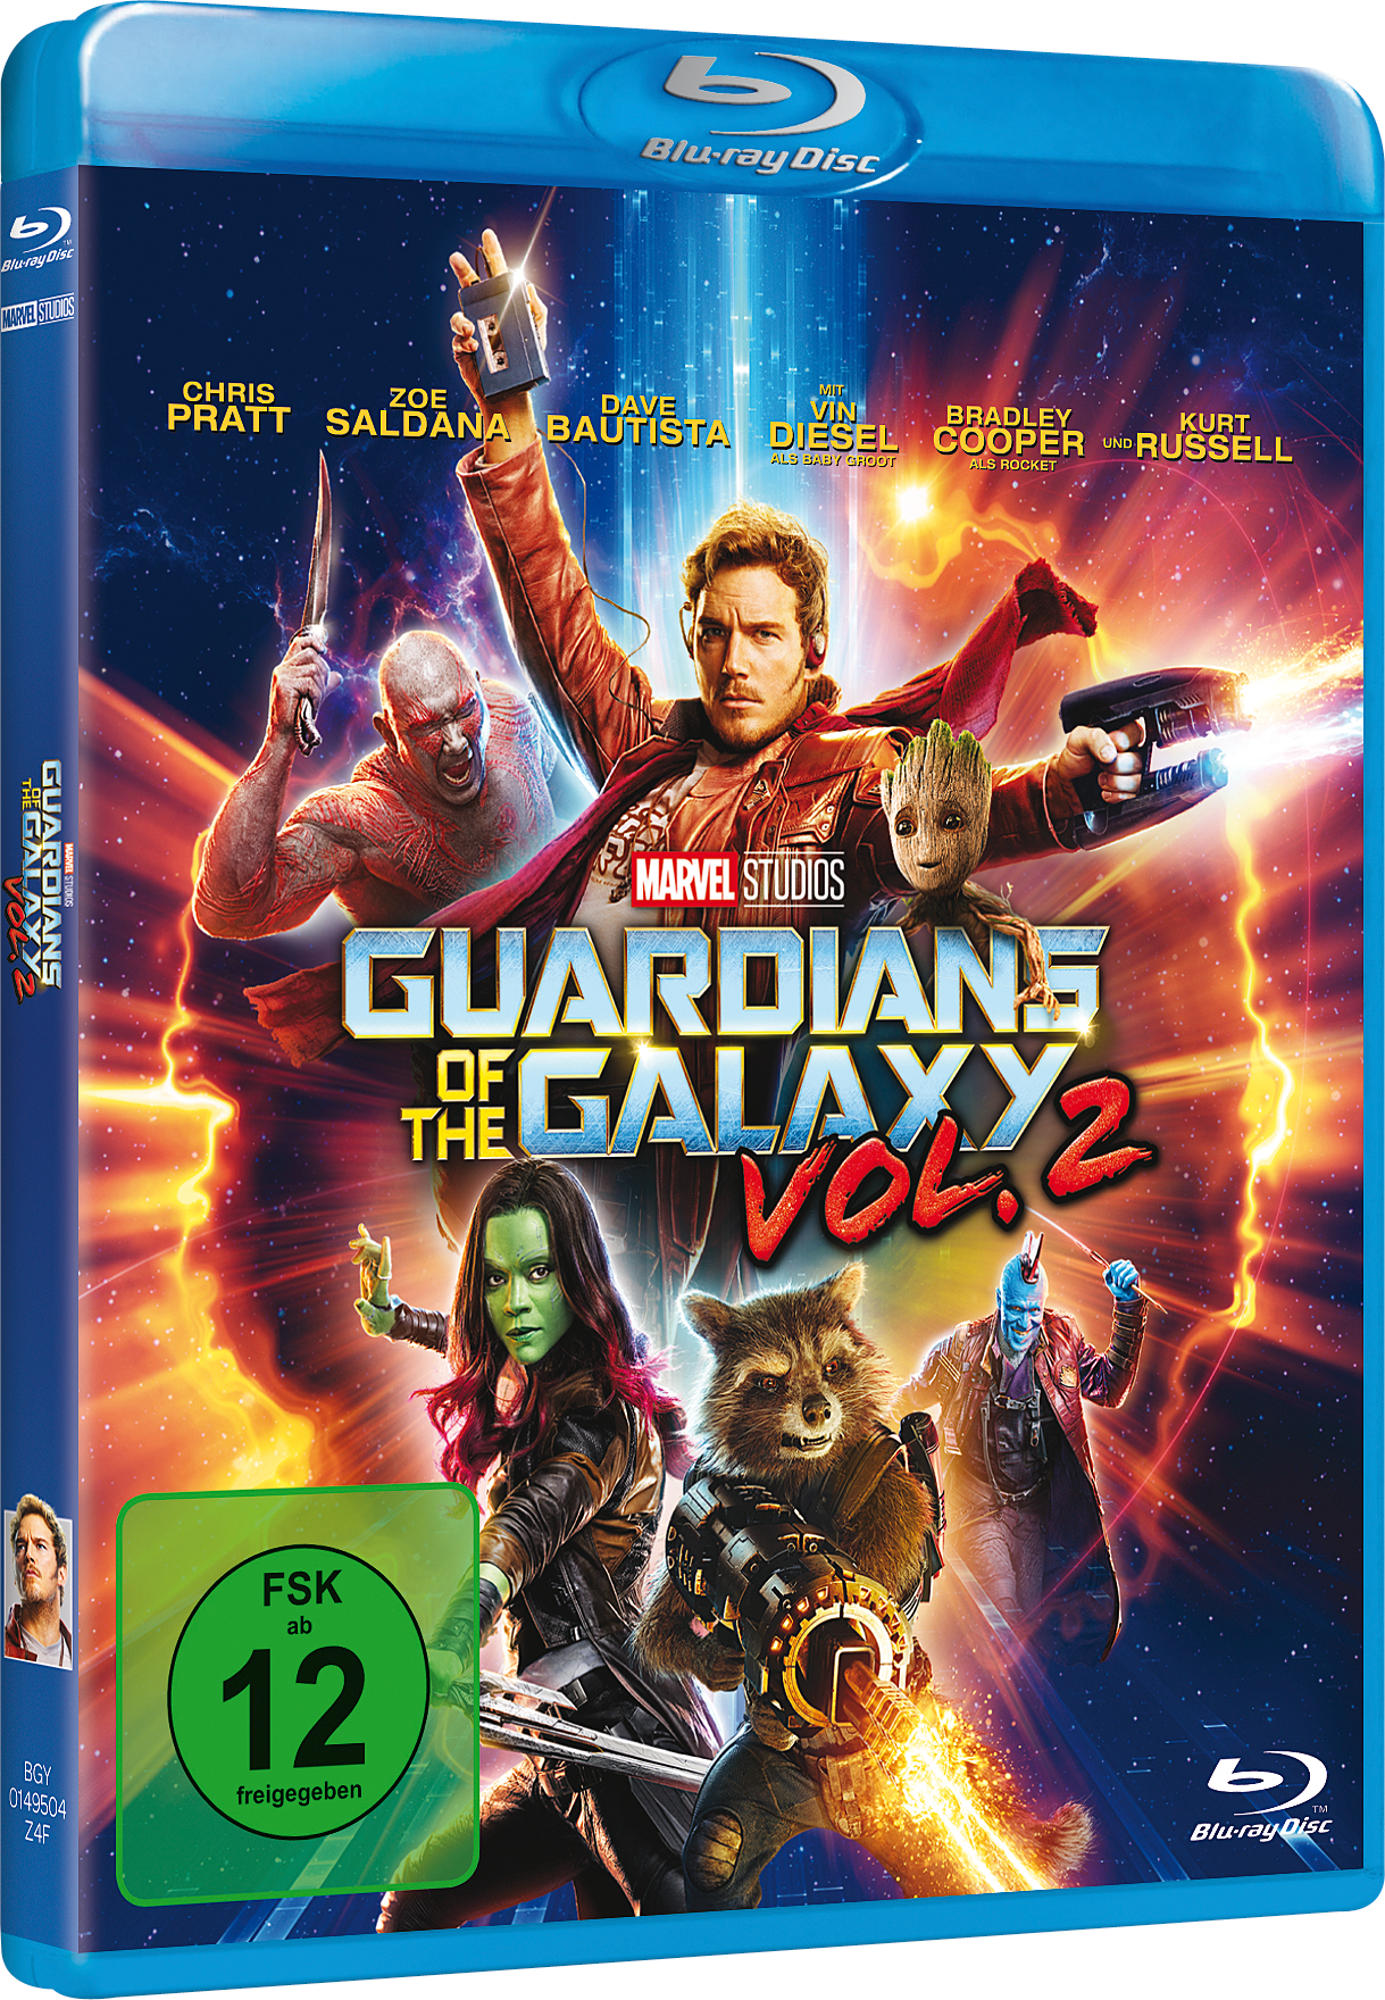 Guardians the Galaxy Vol. 2 Blu-ray of